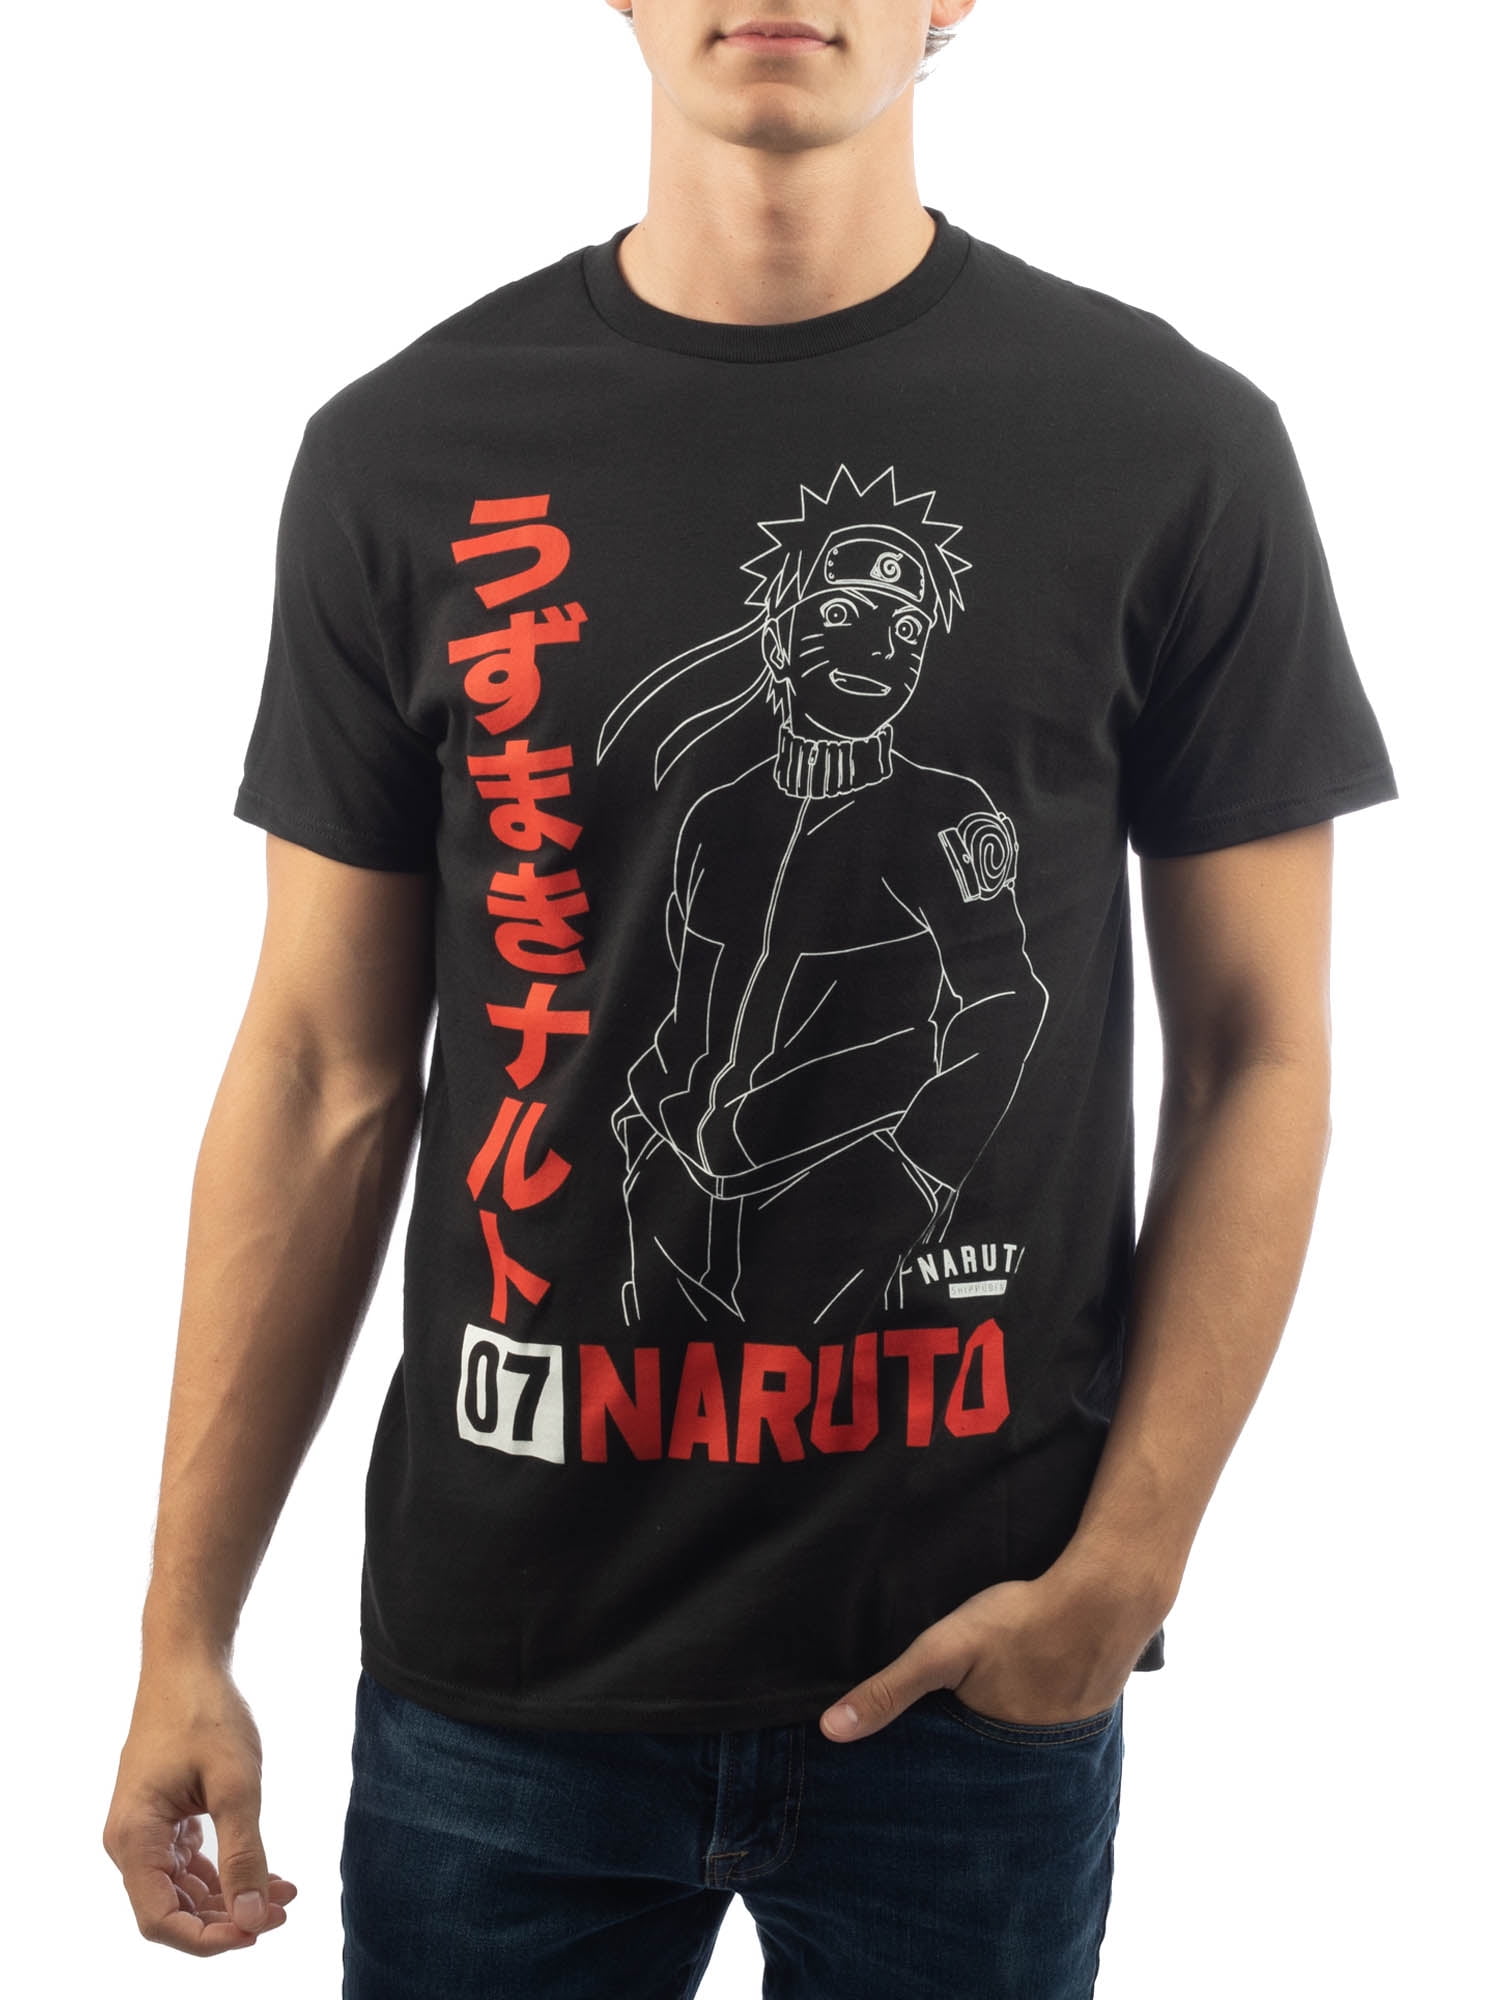 Naruto Shirt, Sasuke Itachi Shirts, I'm a Simple Man I Like Boobs and -  Dashing Tee